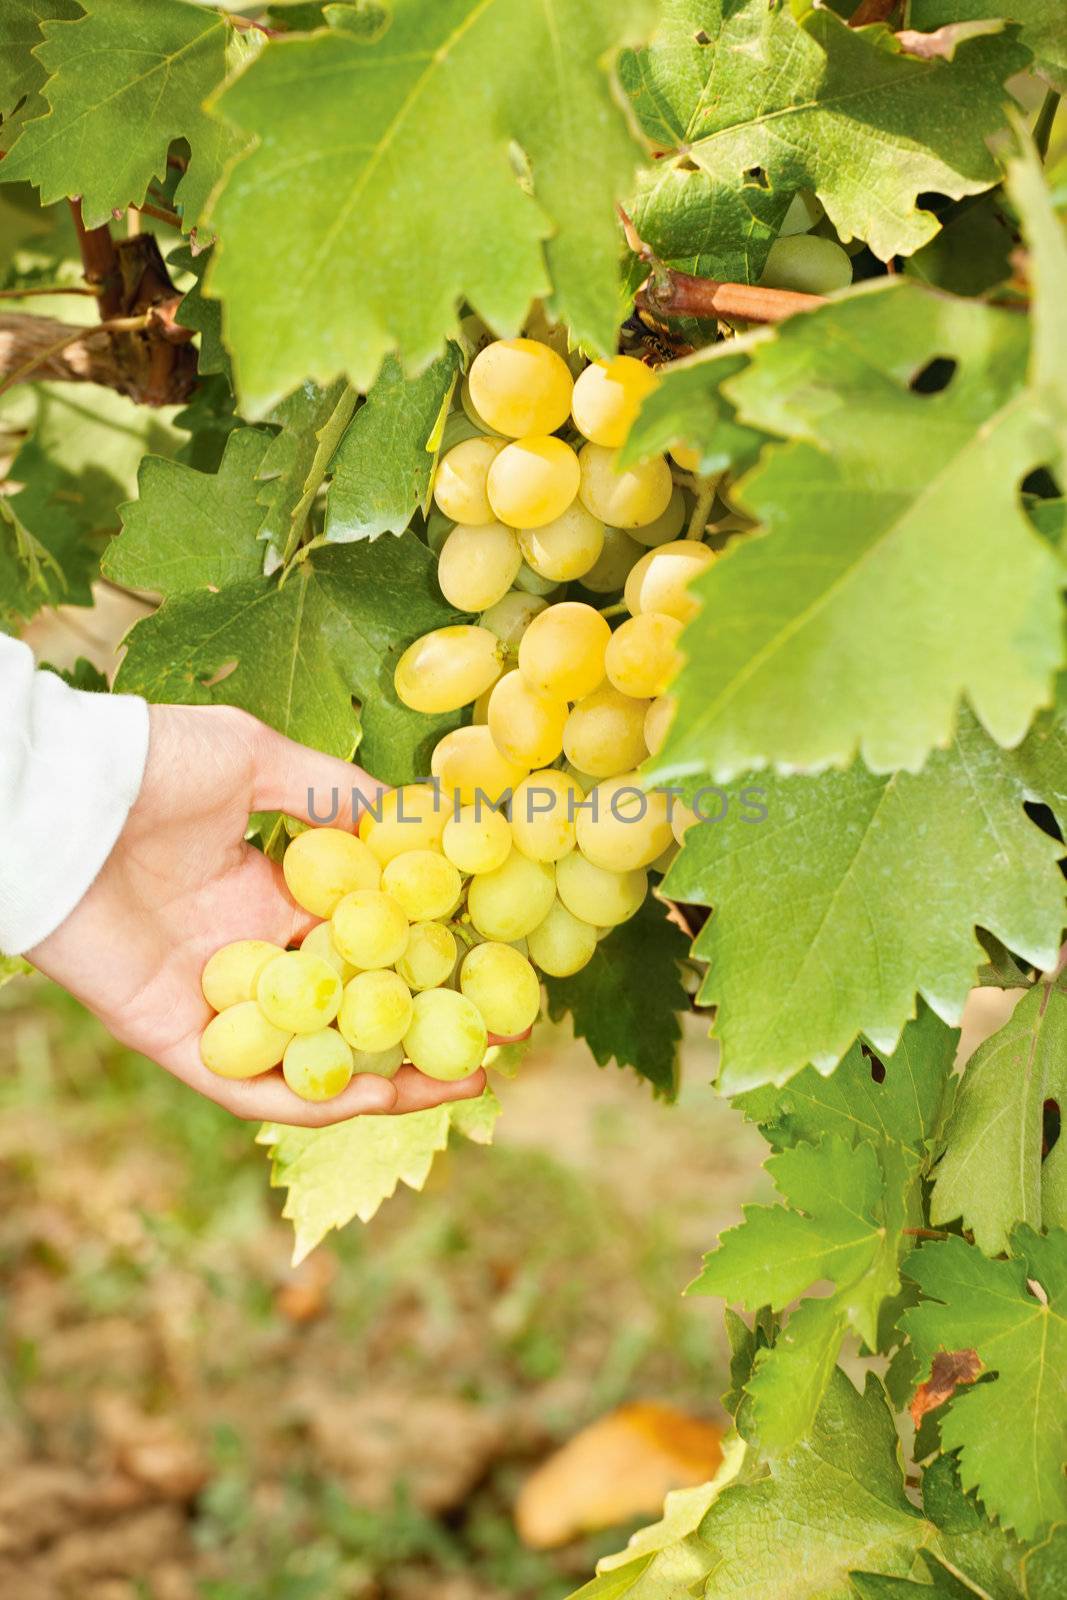 Picking grape in a vineyard